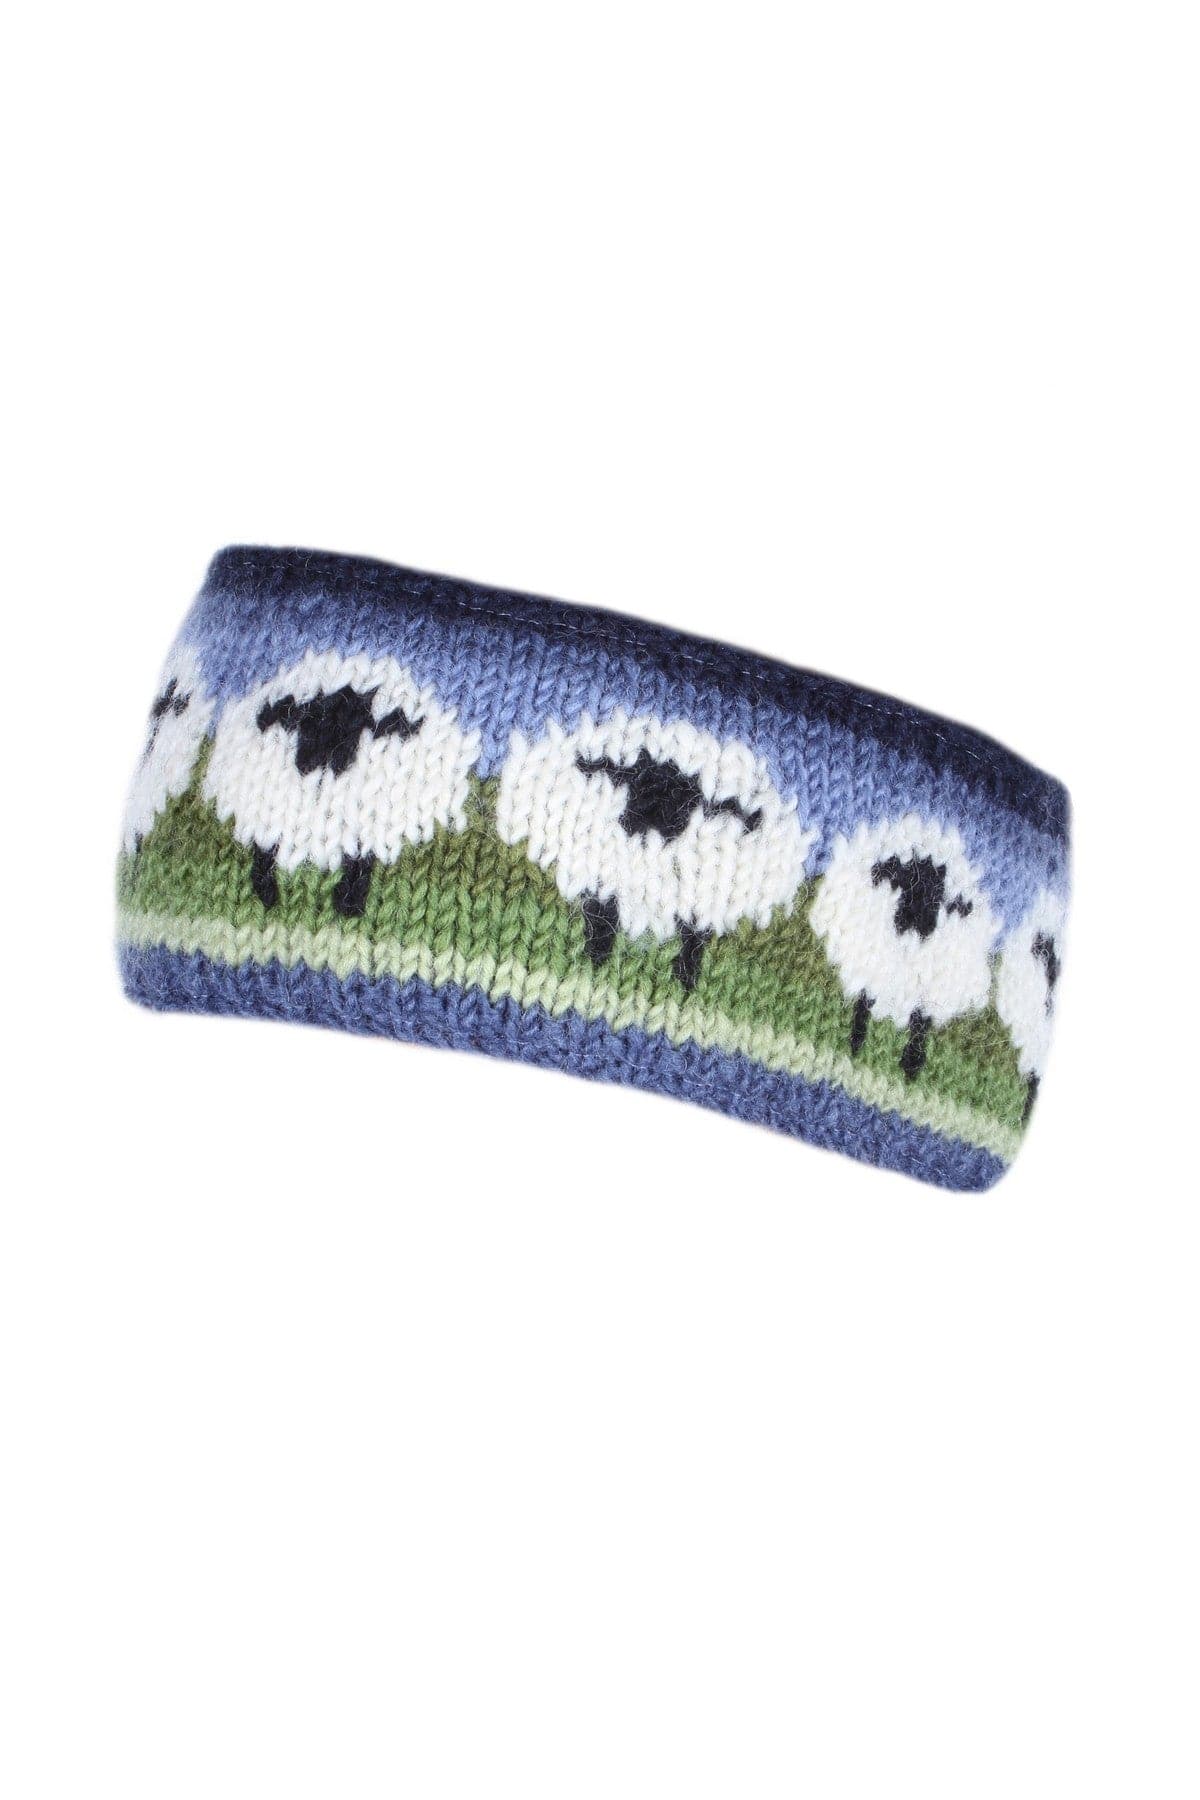 lusciousscarves Hats Pachamama Flock Of Sheep Headband